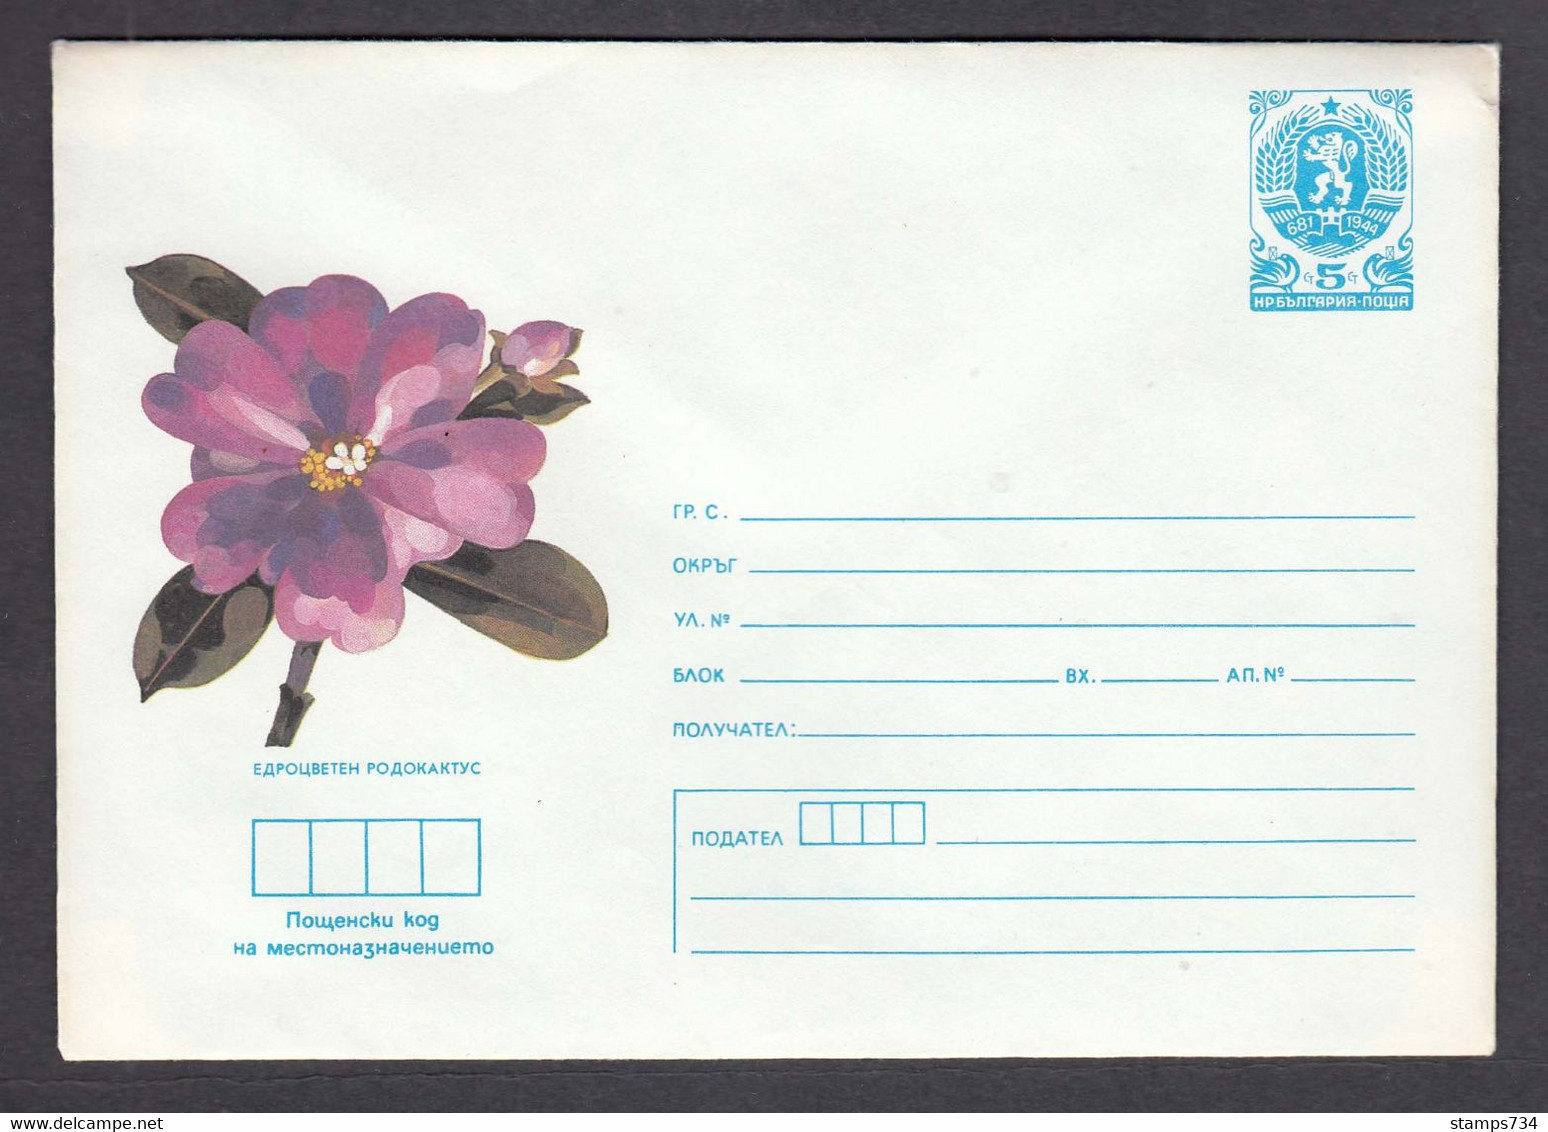 PS 887/1987 - Mint, Flower: Large-flowered Rhodocactus, Post. Stationery - Bulgaria - Enveloppes